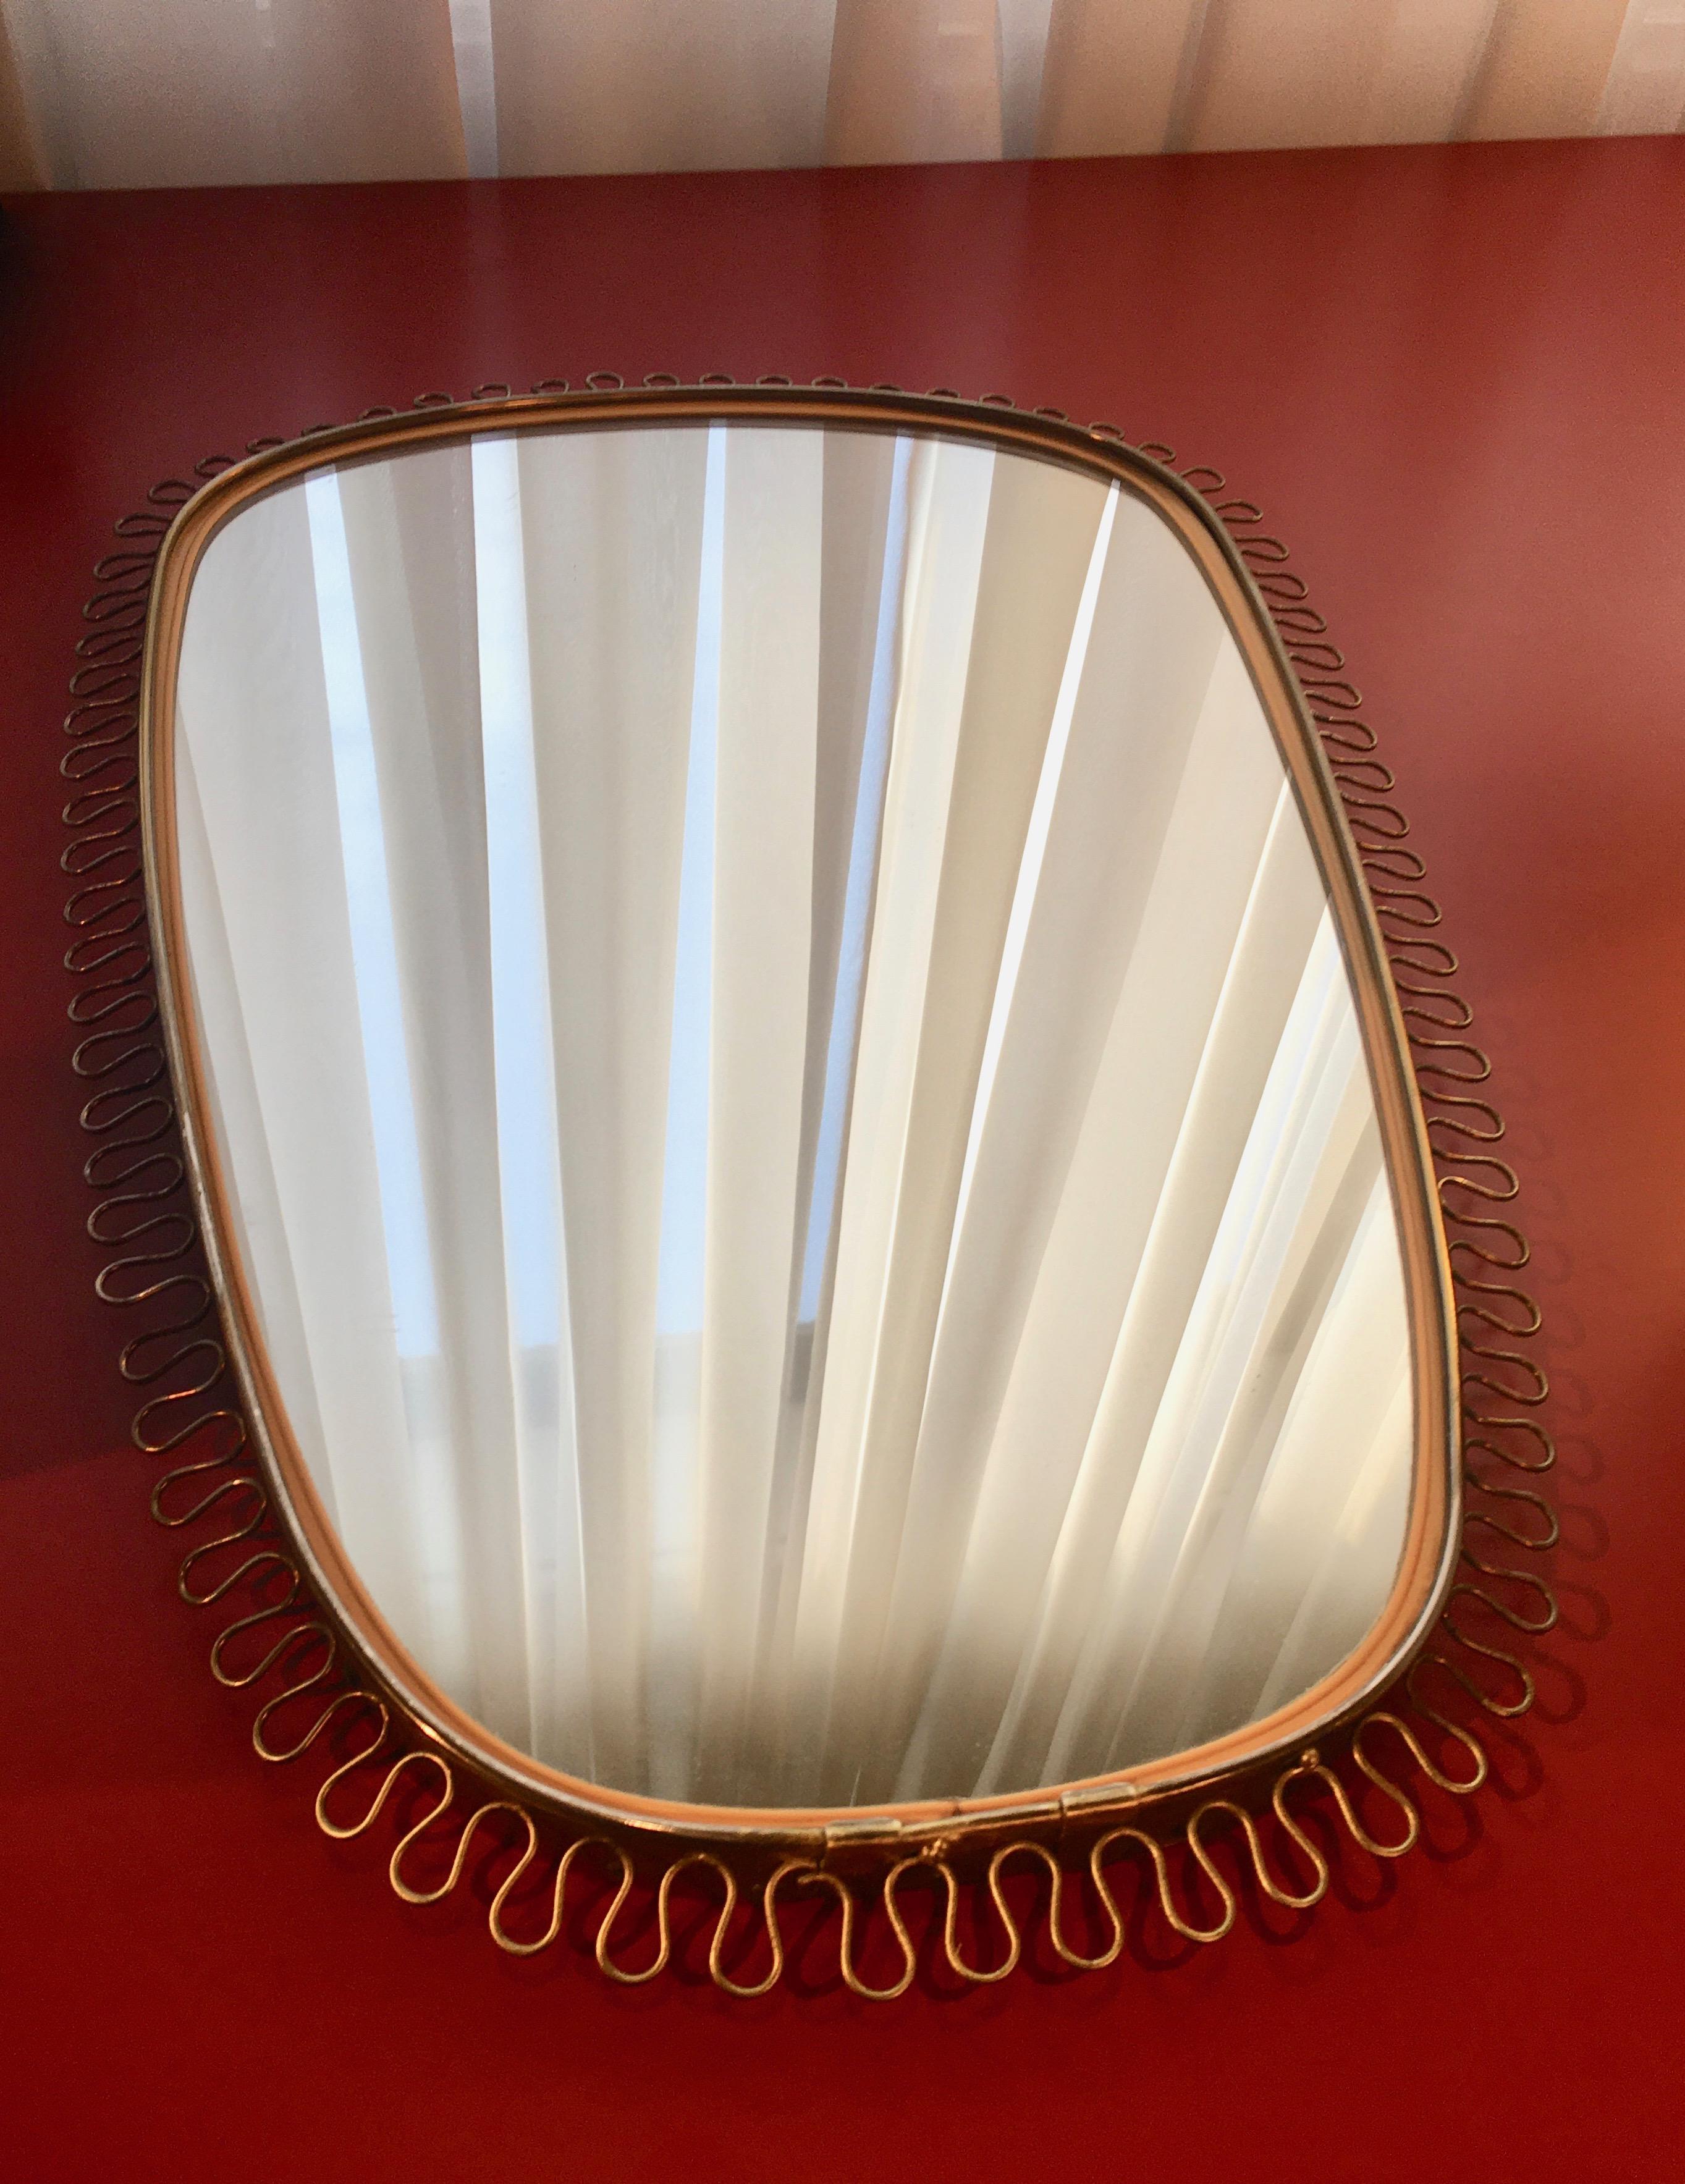 Ovoid wall mirror produced by Svenskt (Sweden), circa 1950.
Stamped on the back side.
Designed by Josef Frank.